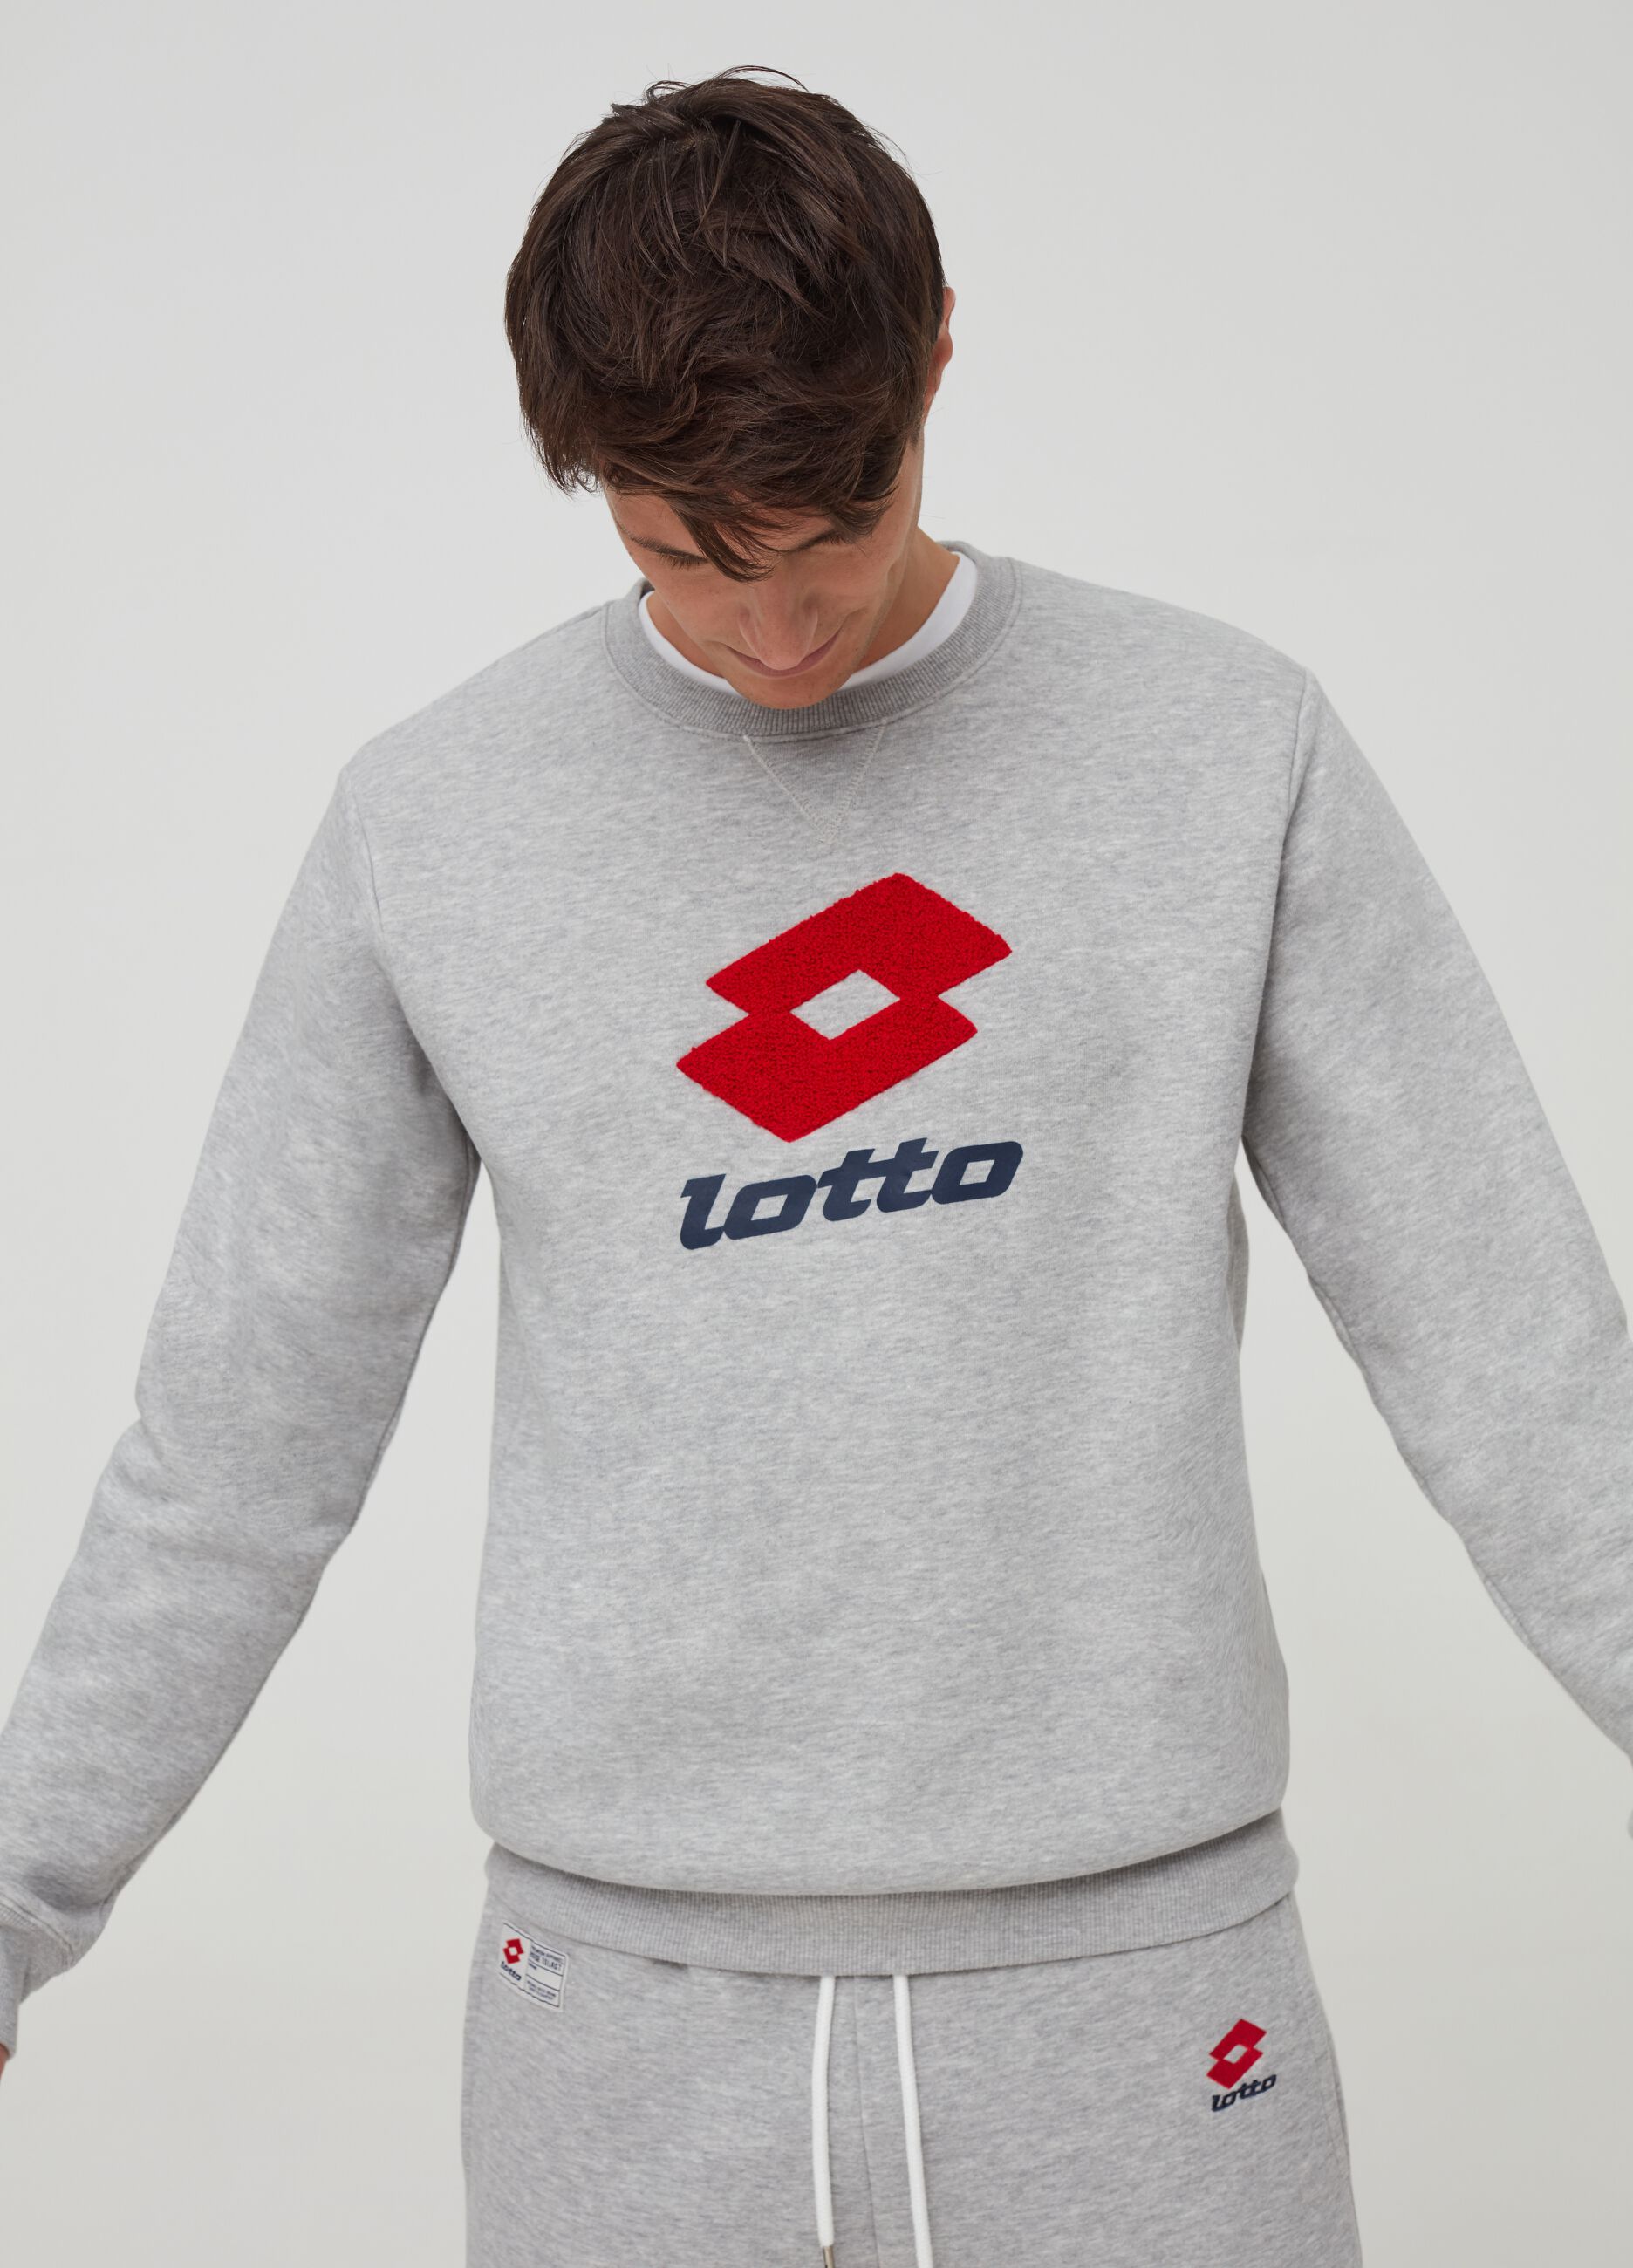 Mélange Lotto sweatshirt with round neck